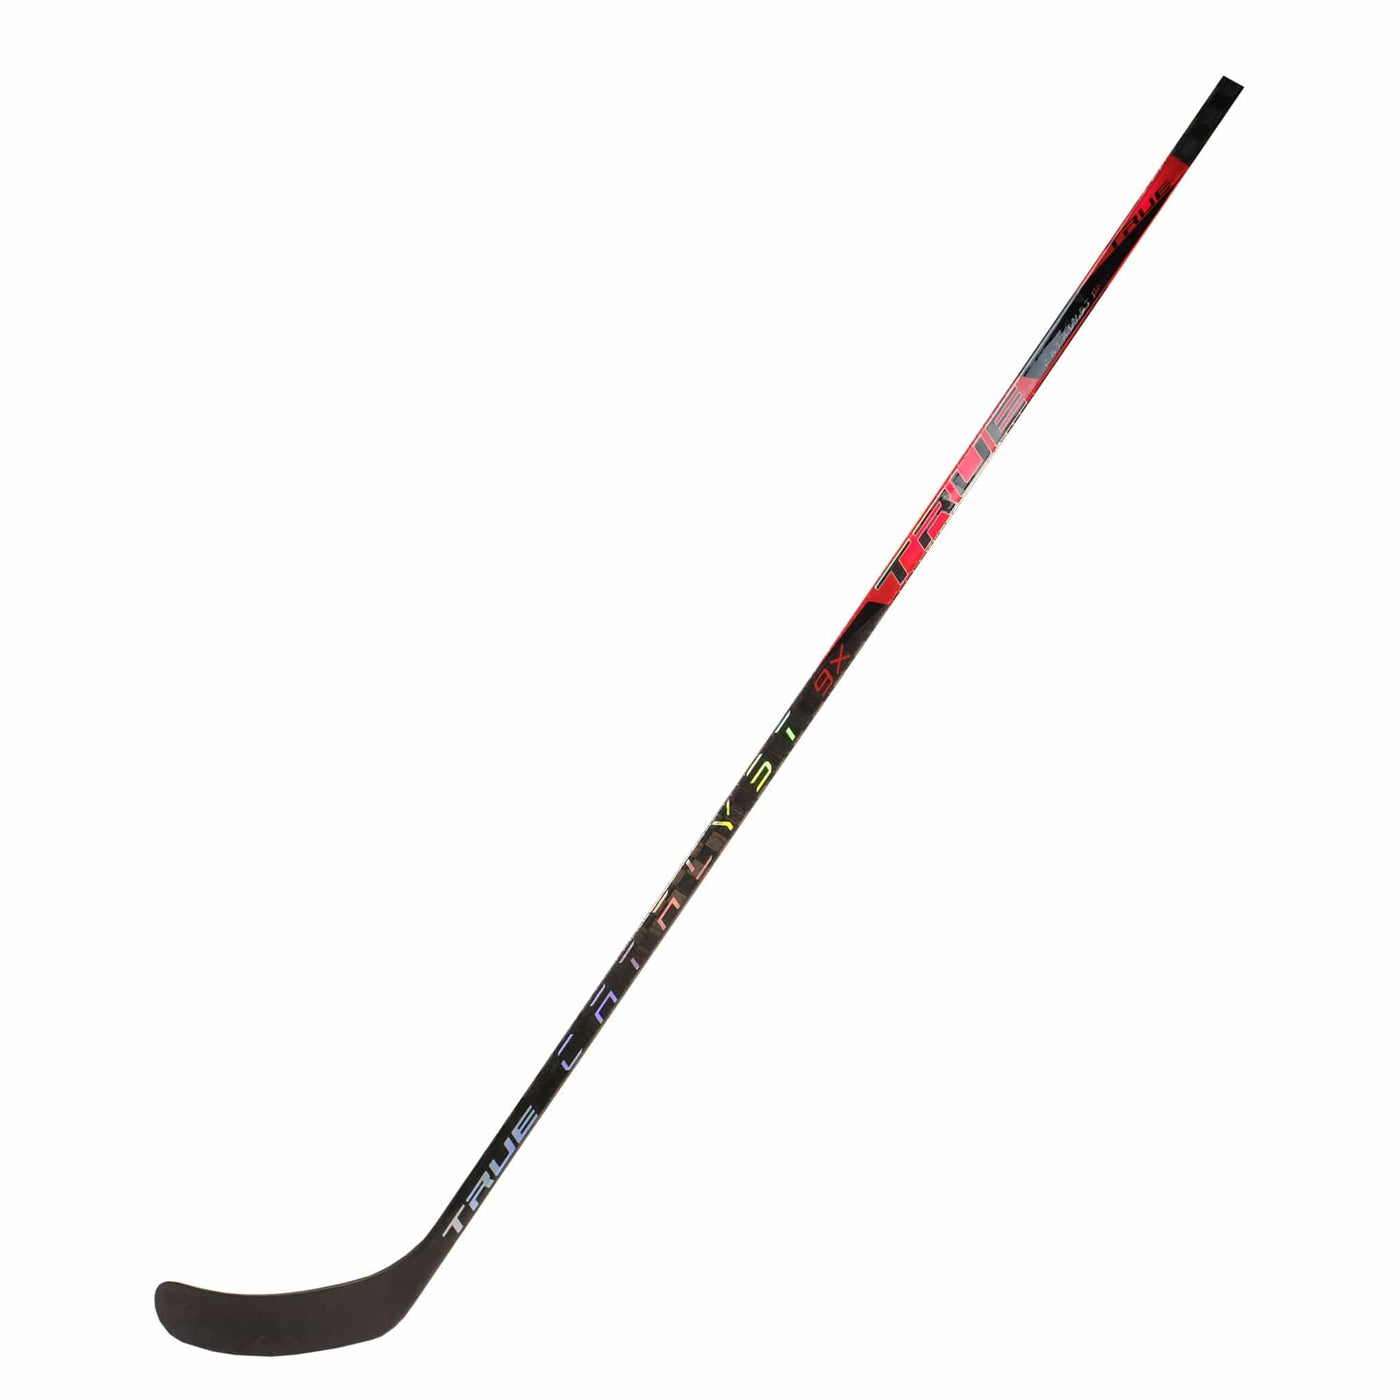 TRUE Catalyst 9X Pro Stock Senior Hockey Stick - Brady Tkachuk - P92M - L-100 - The Hockey Shop Source For Sports